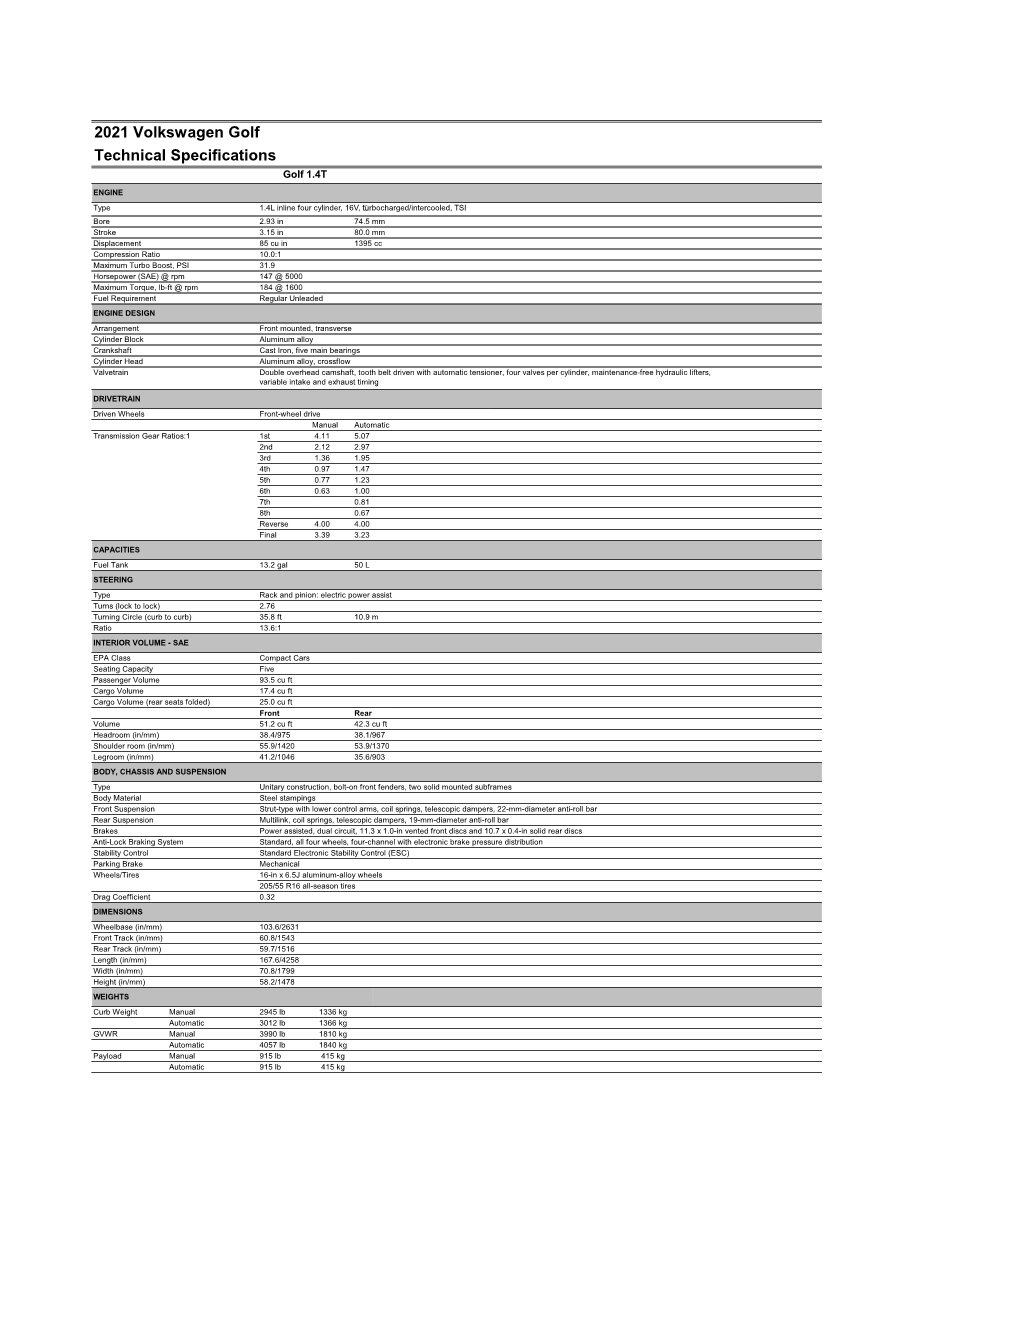 2021 Volkswagen Golf Technical Specifications Golf 1.4T